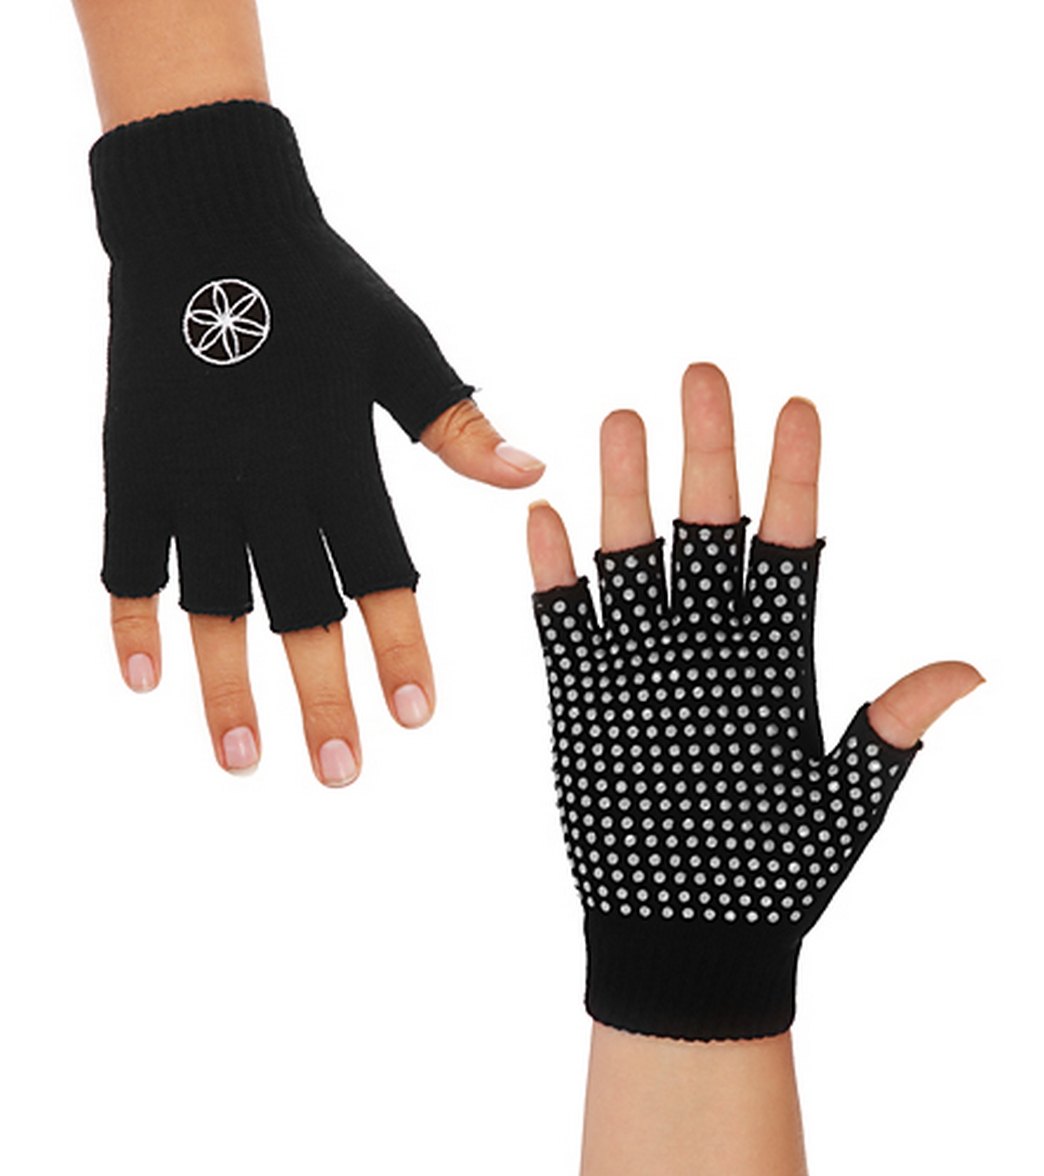 Gaiam Super Grippy Yoga Gloves at